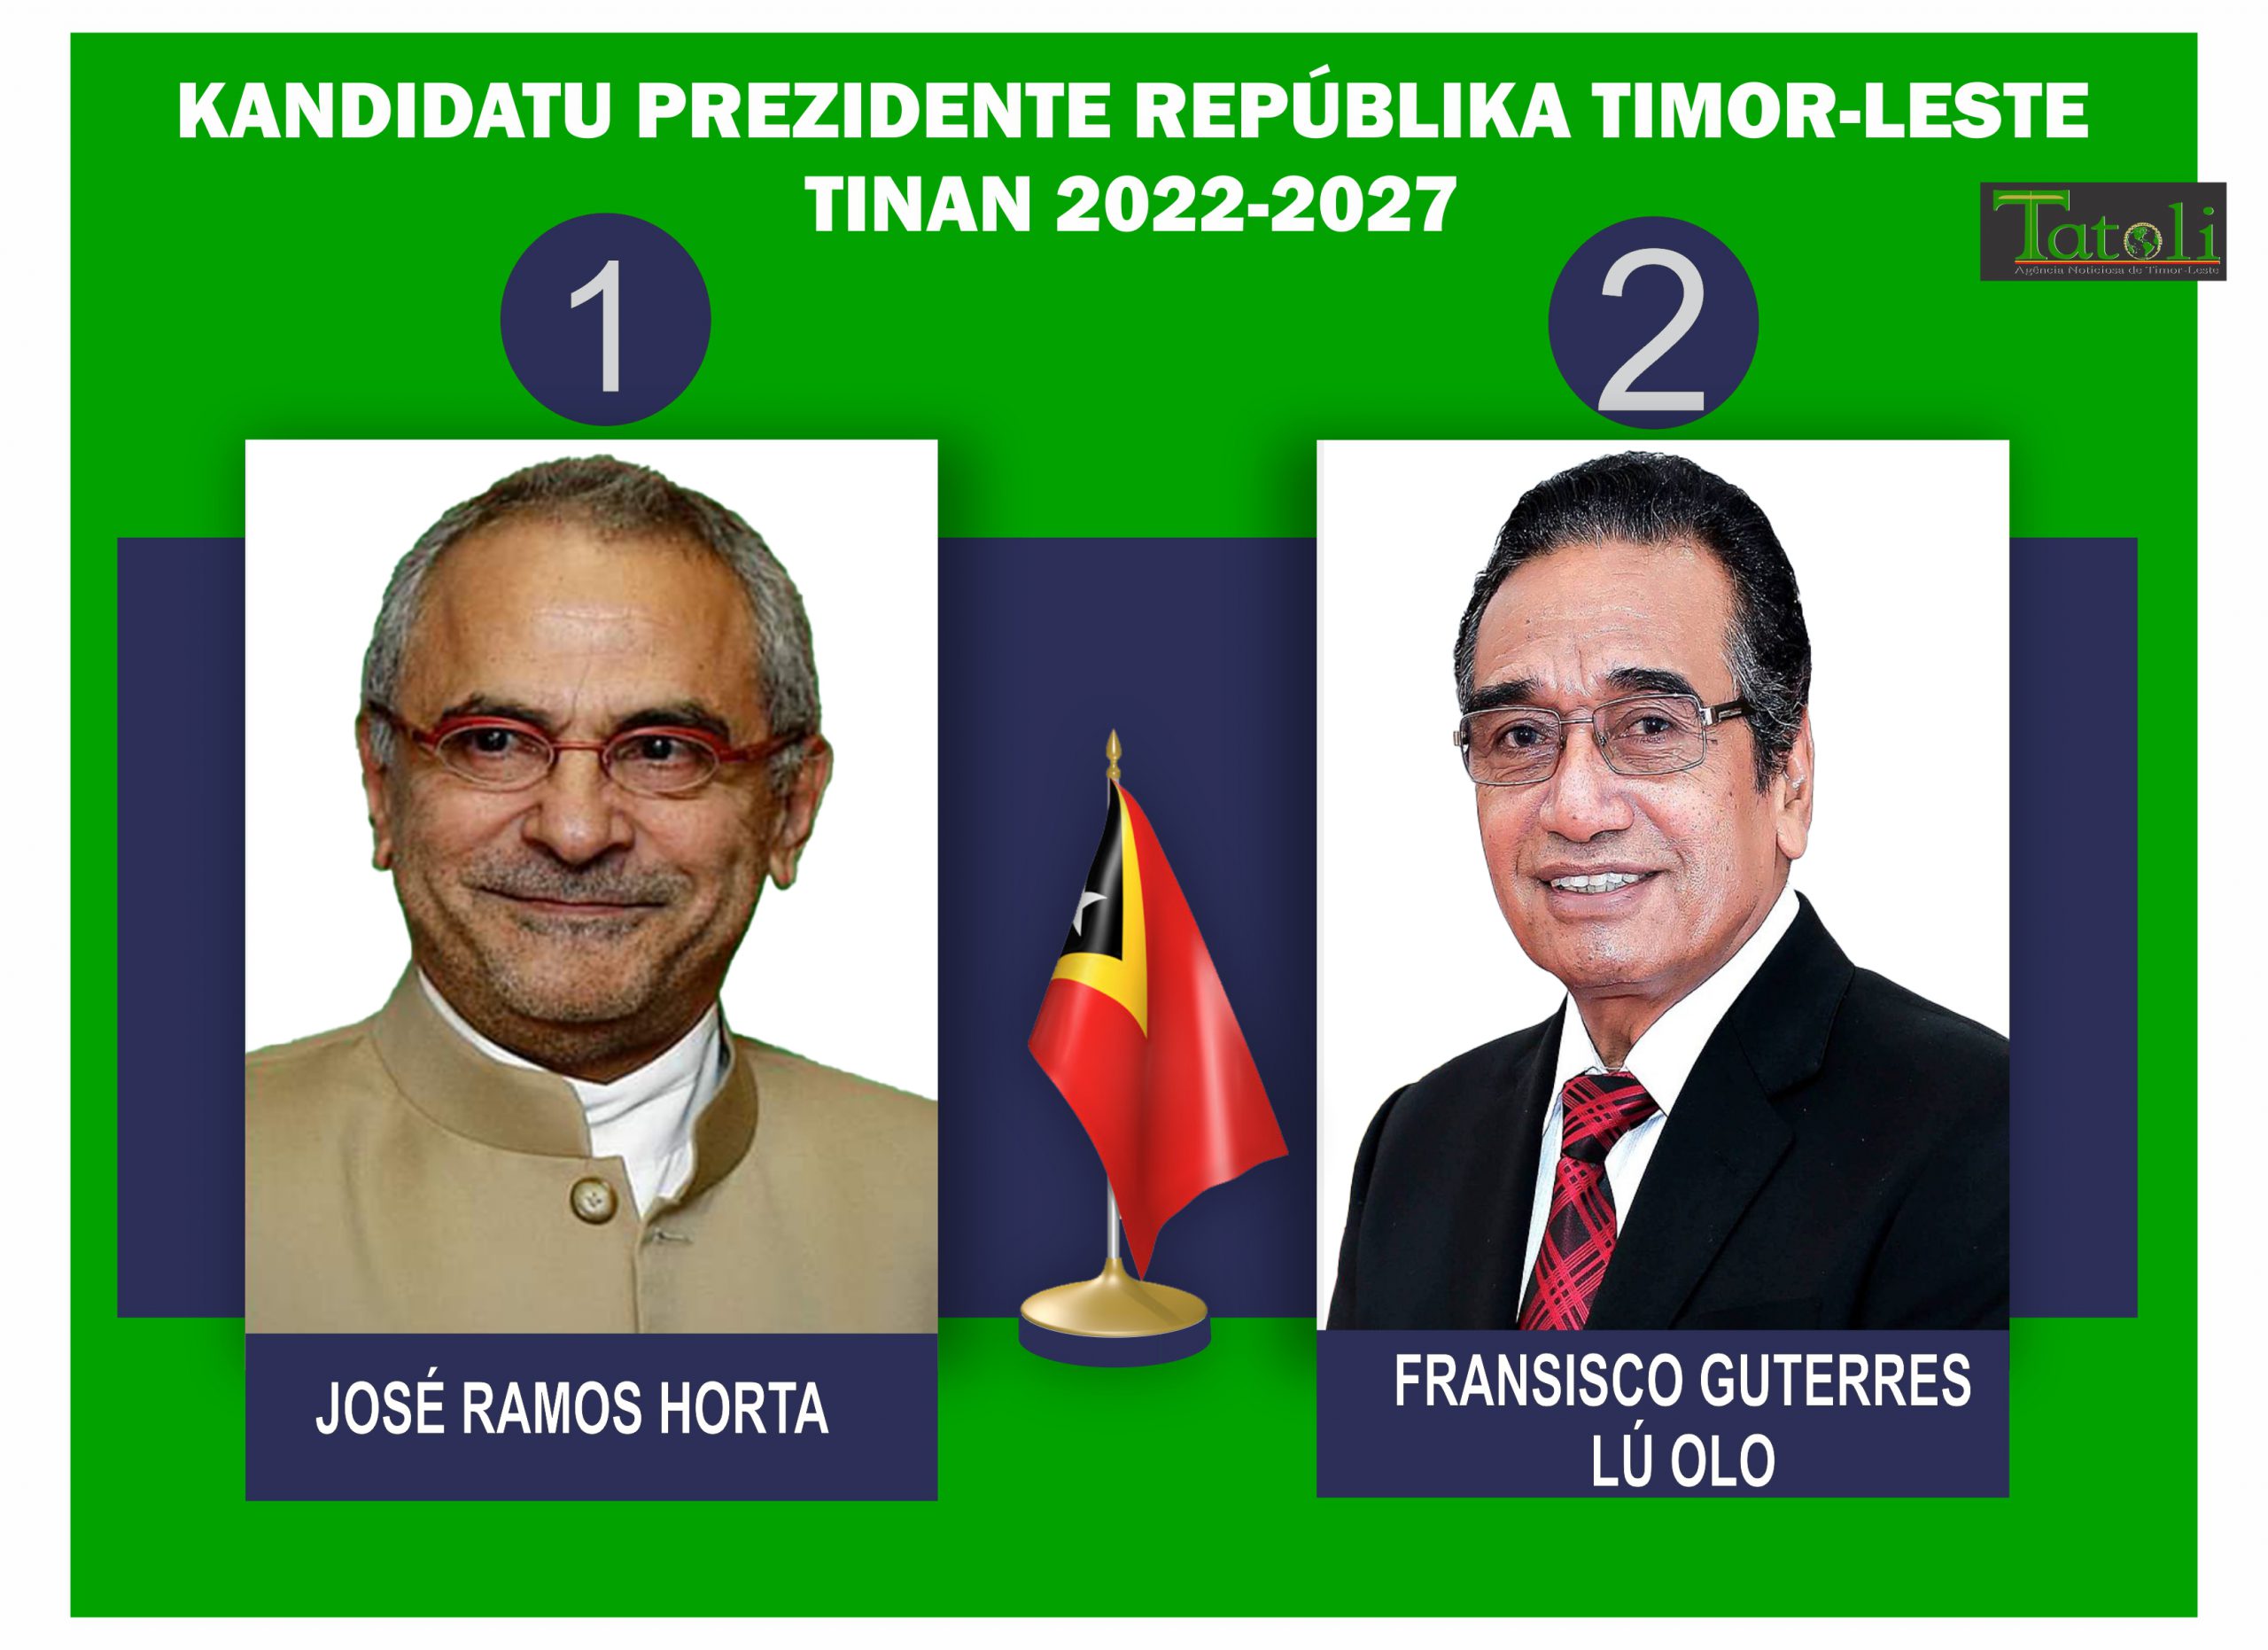 Kandidatu Prezidente Repúblika Timor-Leste tinan 2022-2027